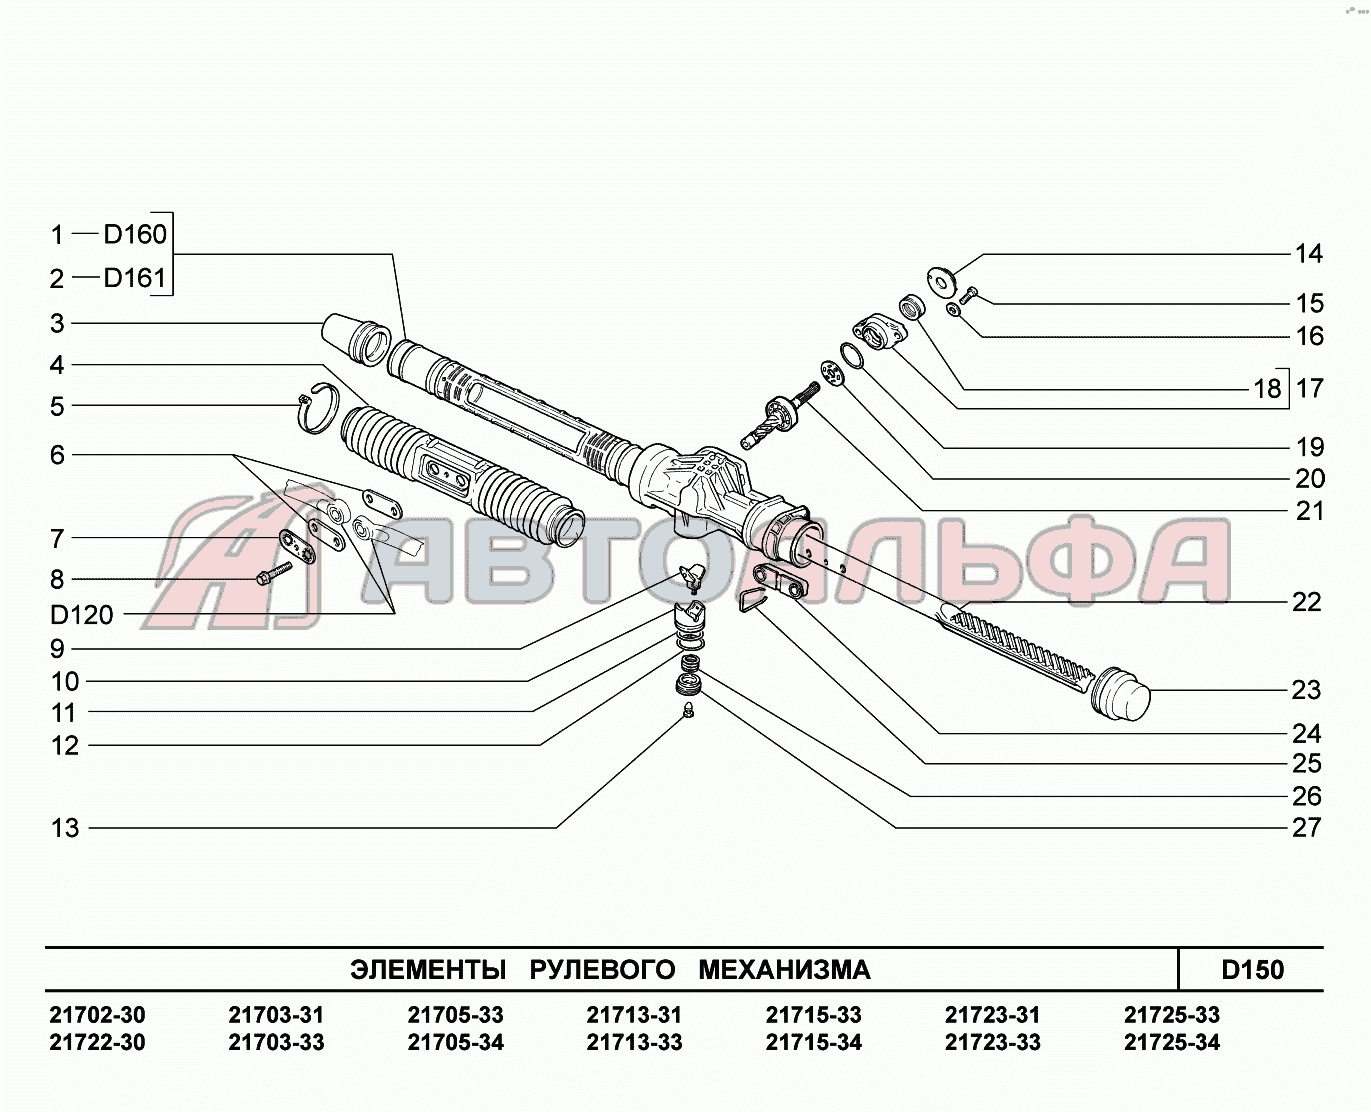 D150. Элементы рулевого механизма LADA Priora FL (ВАЗ 2170), каталог 2013 г.